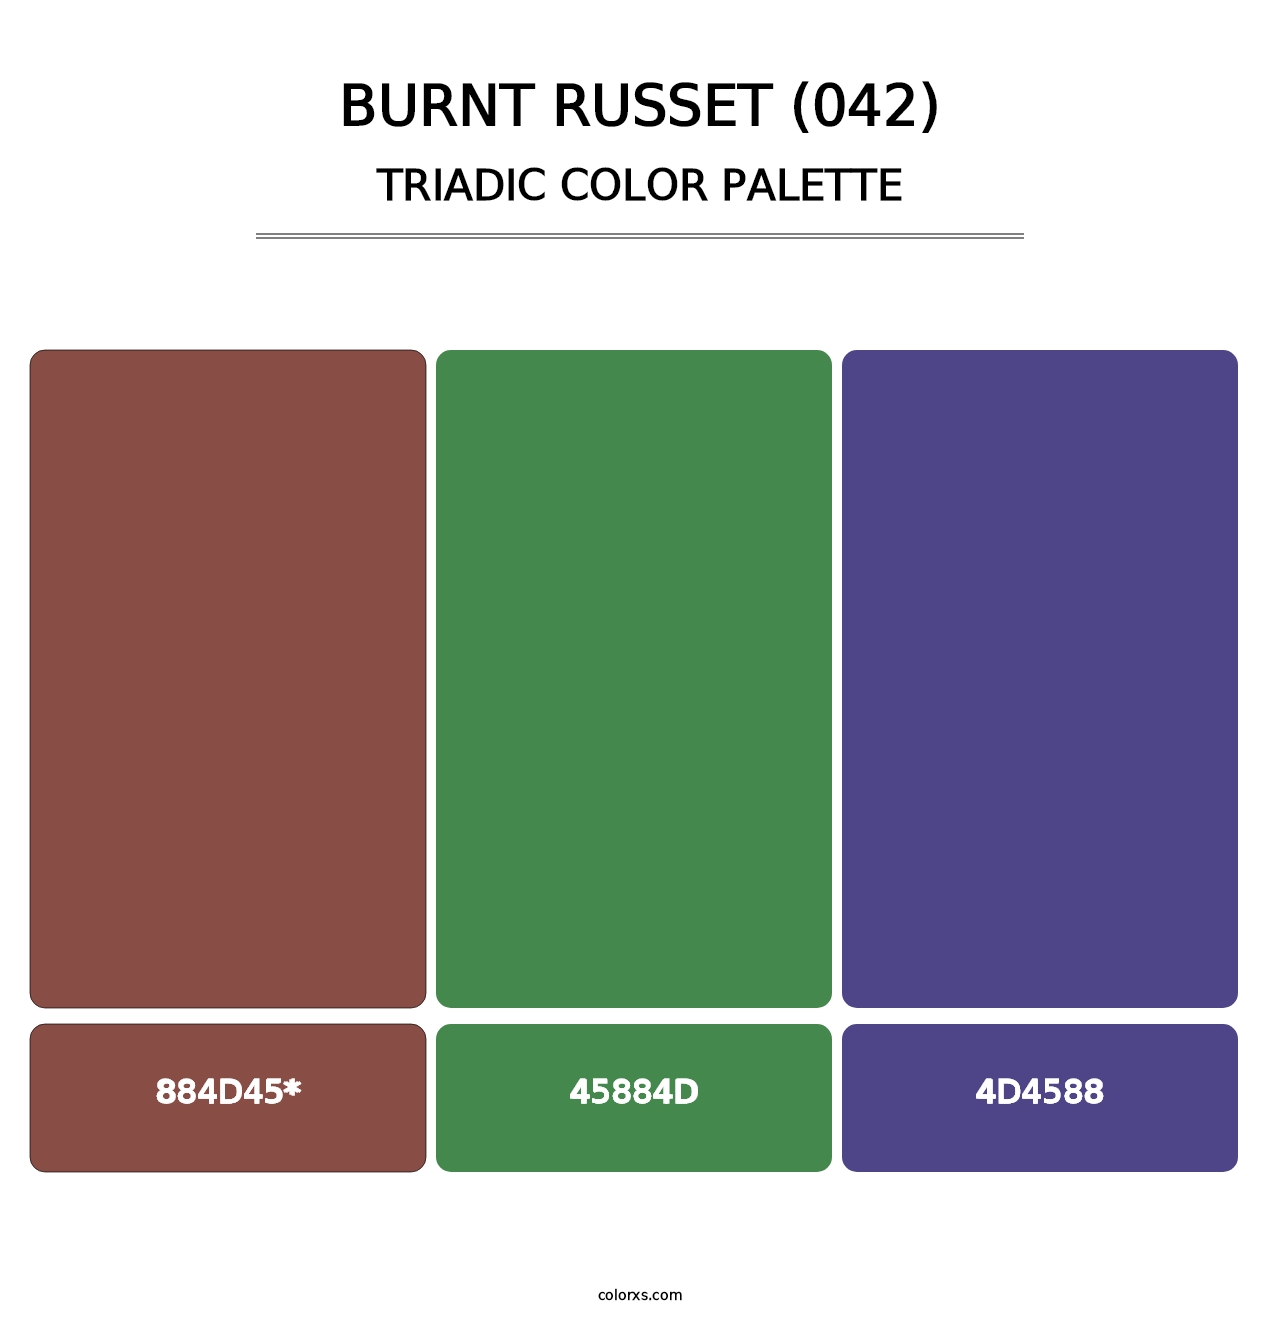 Burnt Russet (042) - Triadic Color Palette